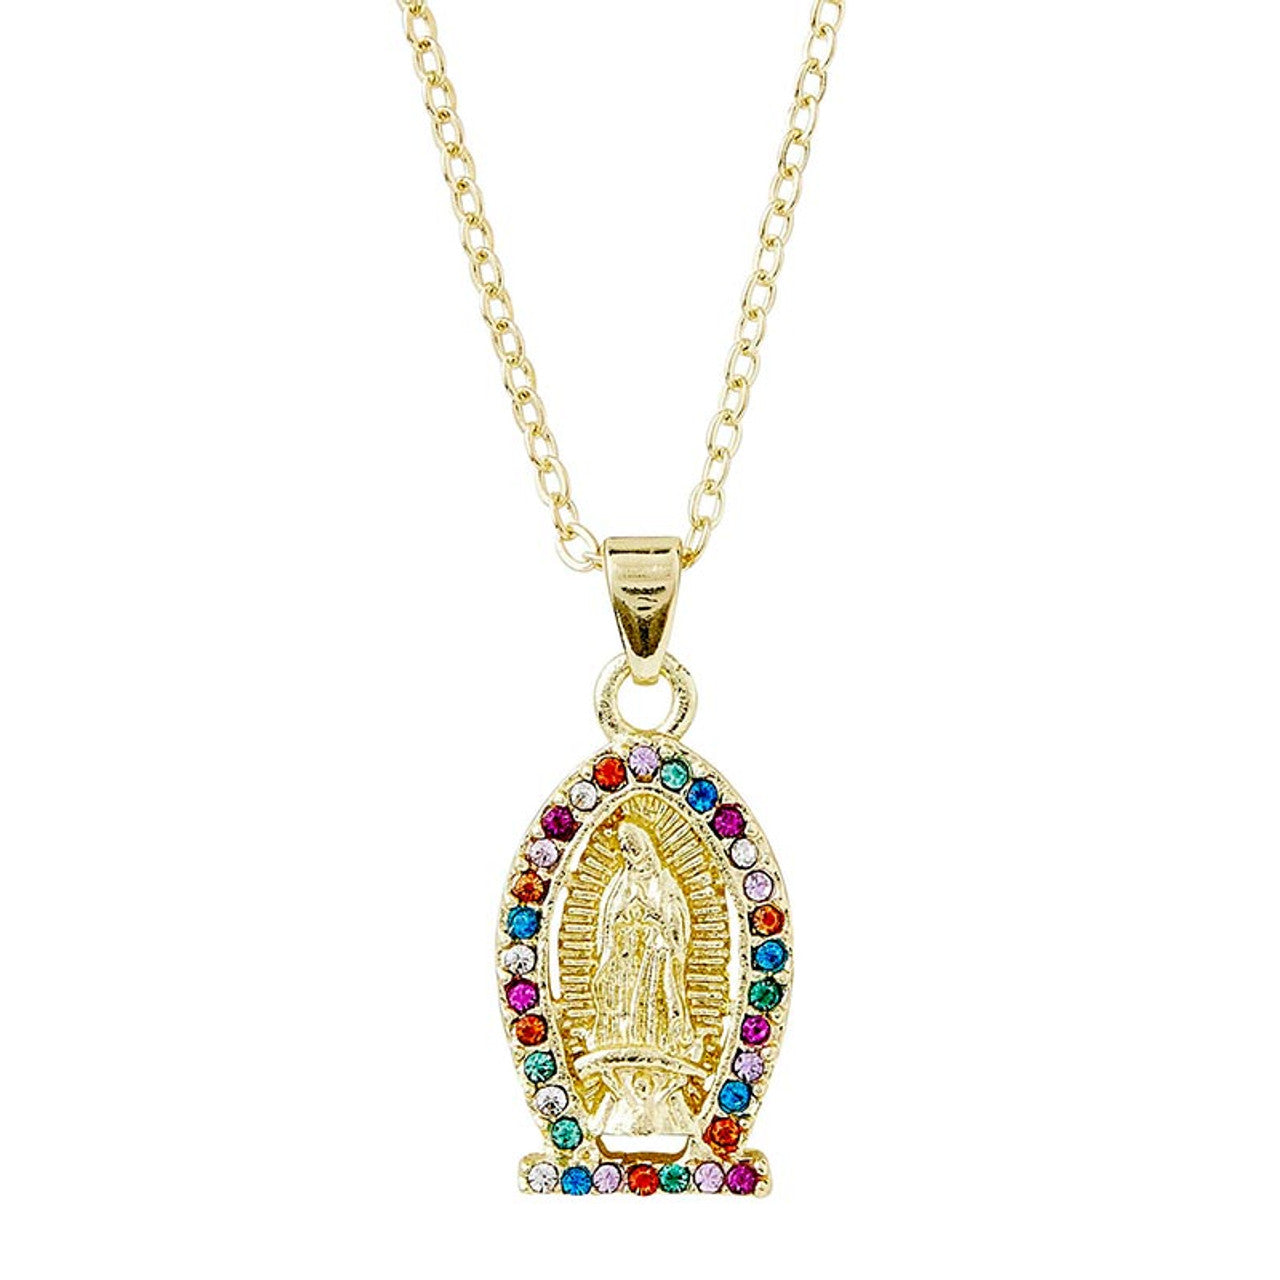 Medalla Virgen de Guadalupe